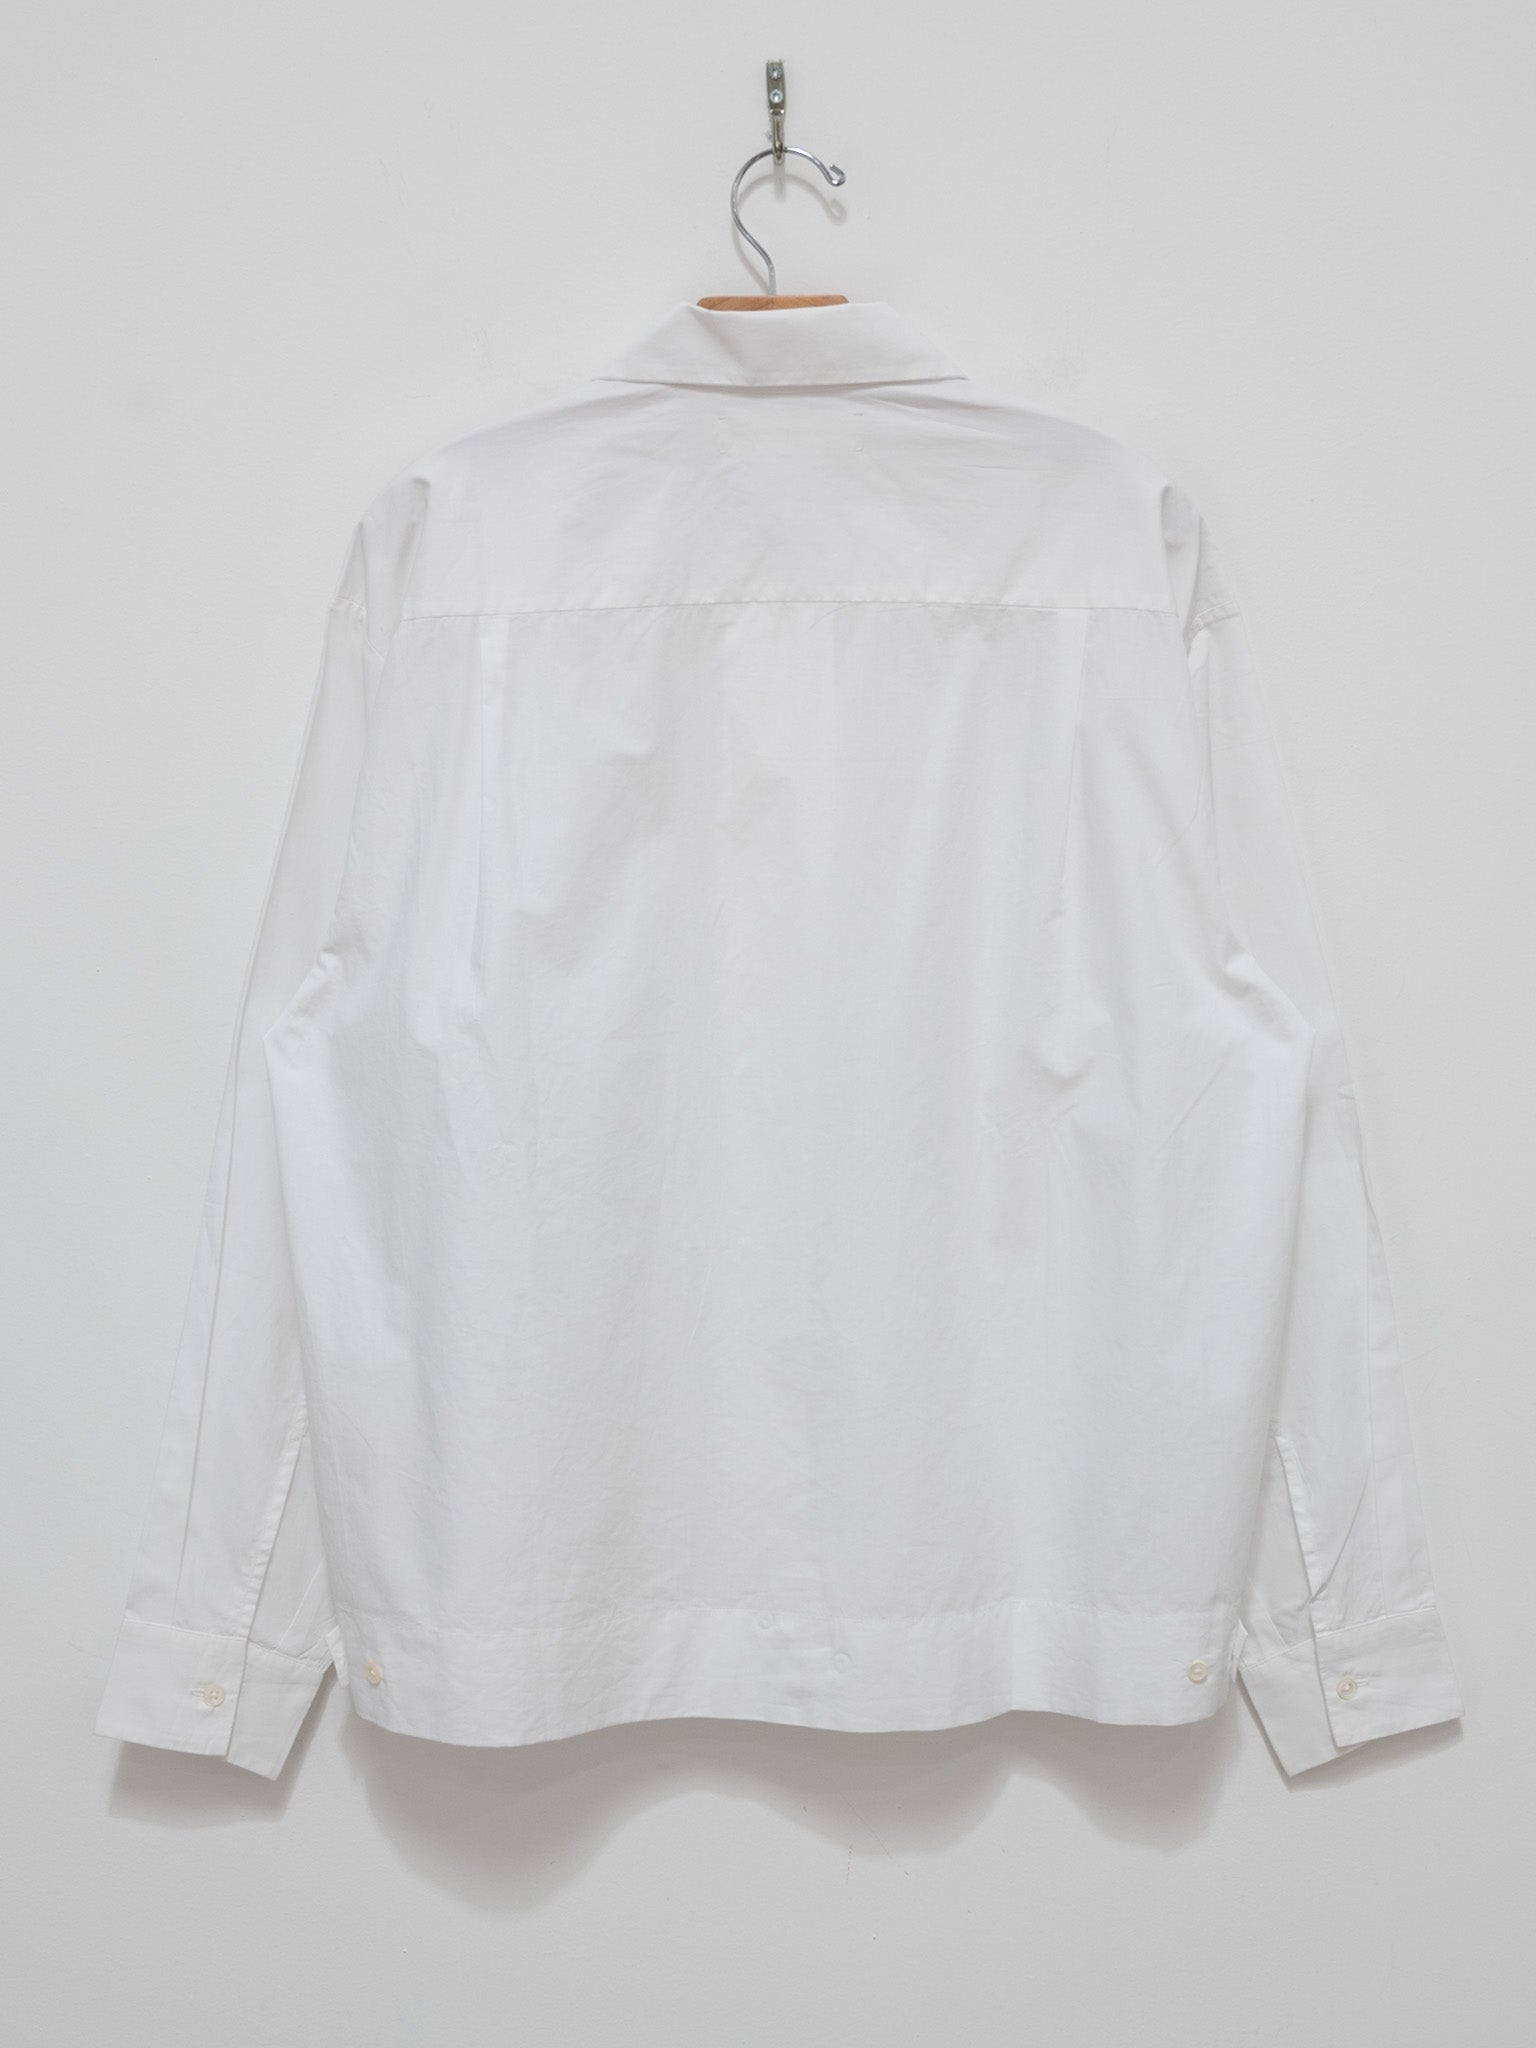 Namu Shop - Jan Machenhauer Frank Shirt - White Cotton Poplin